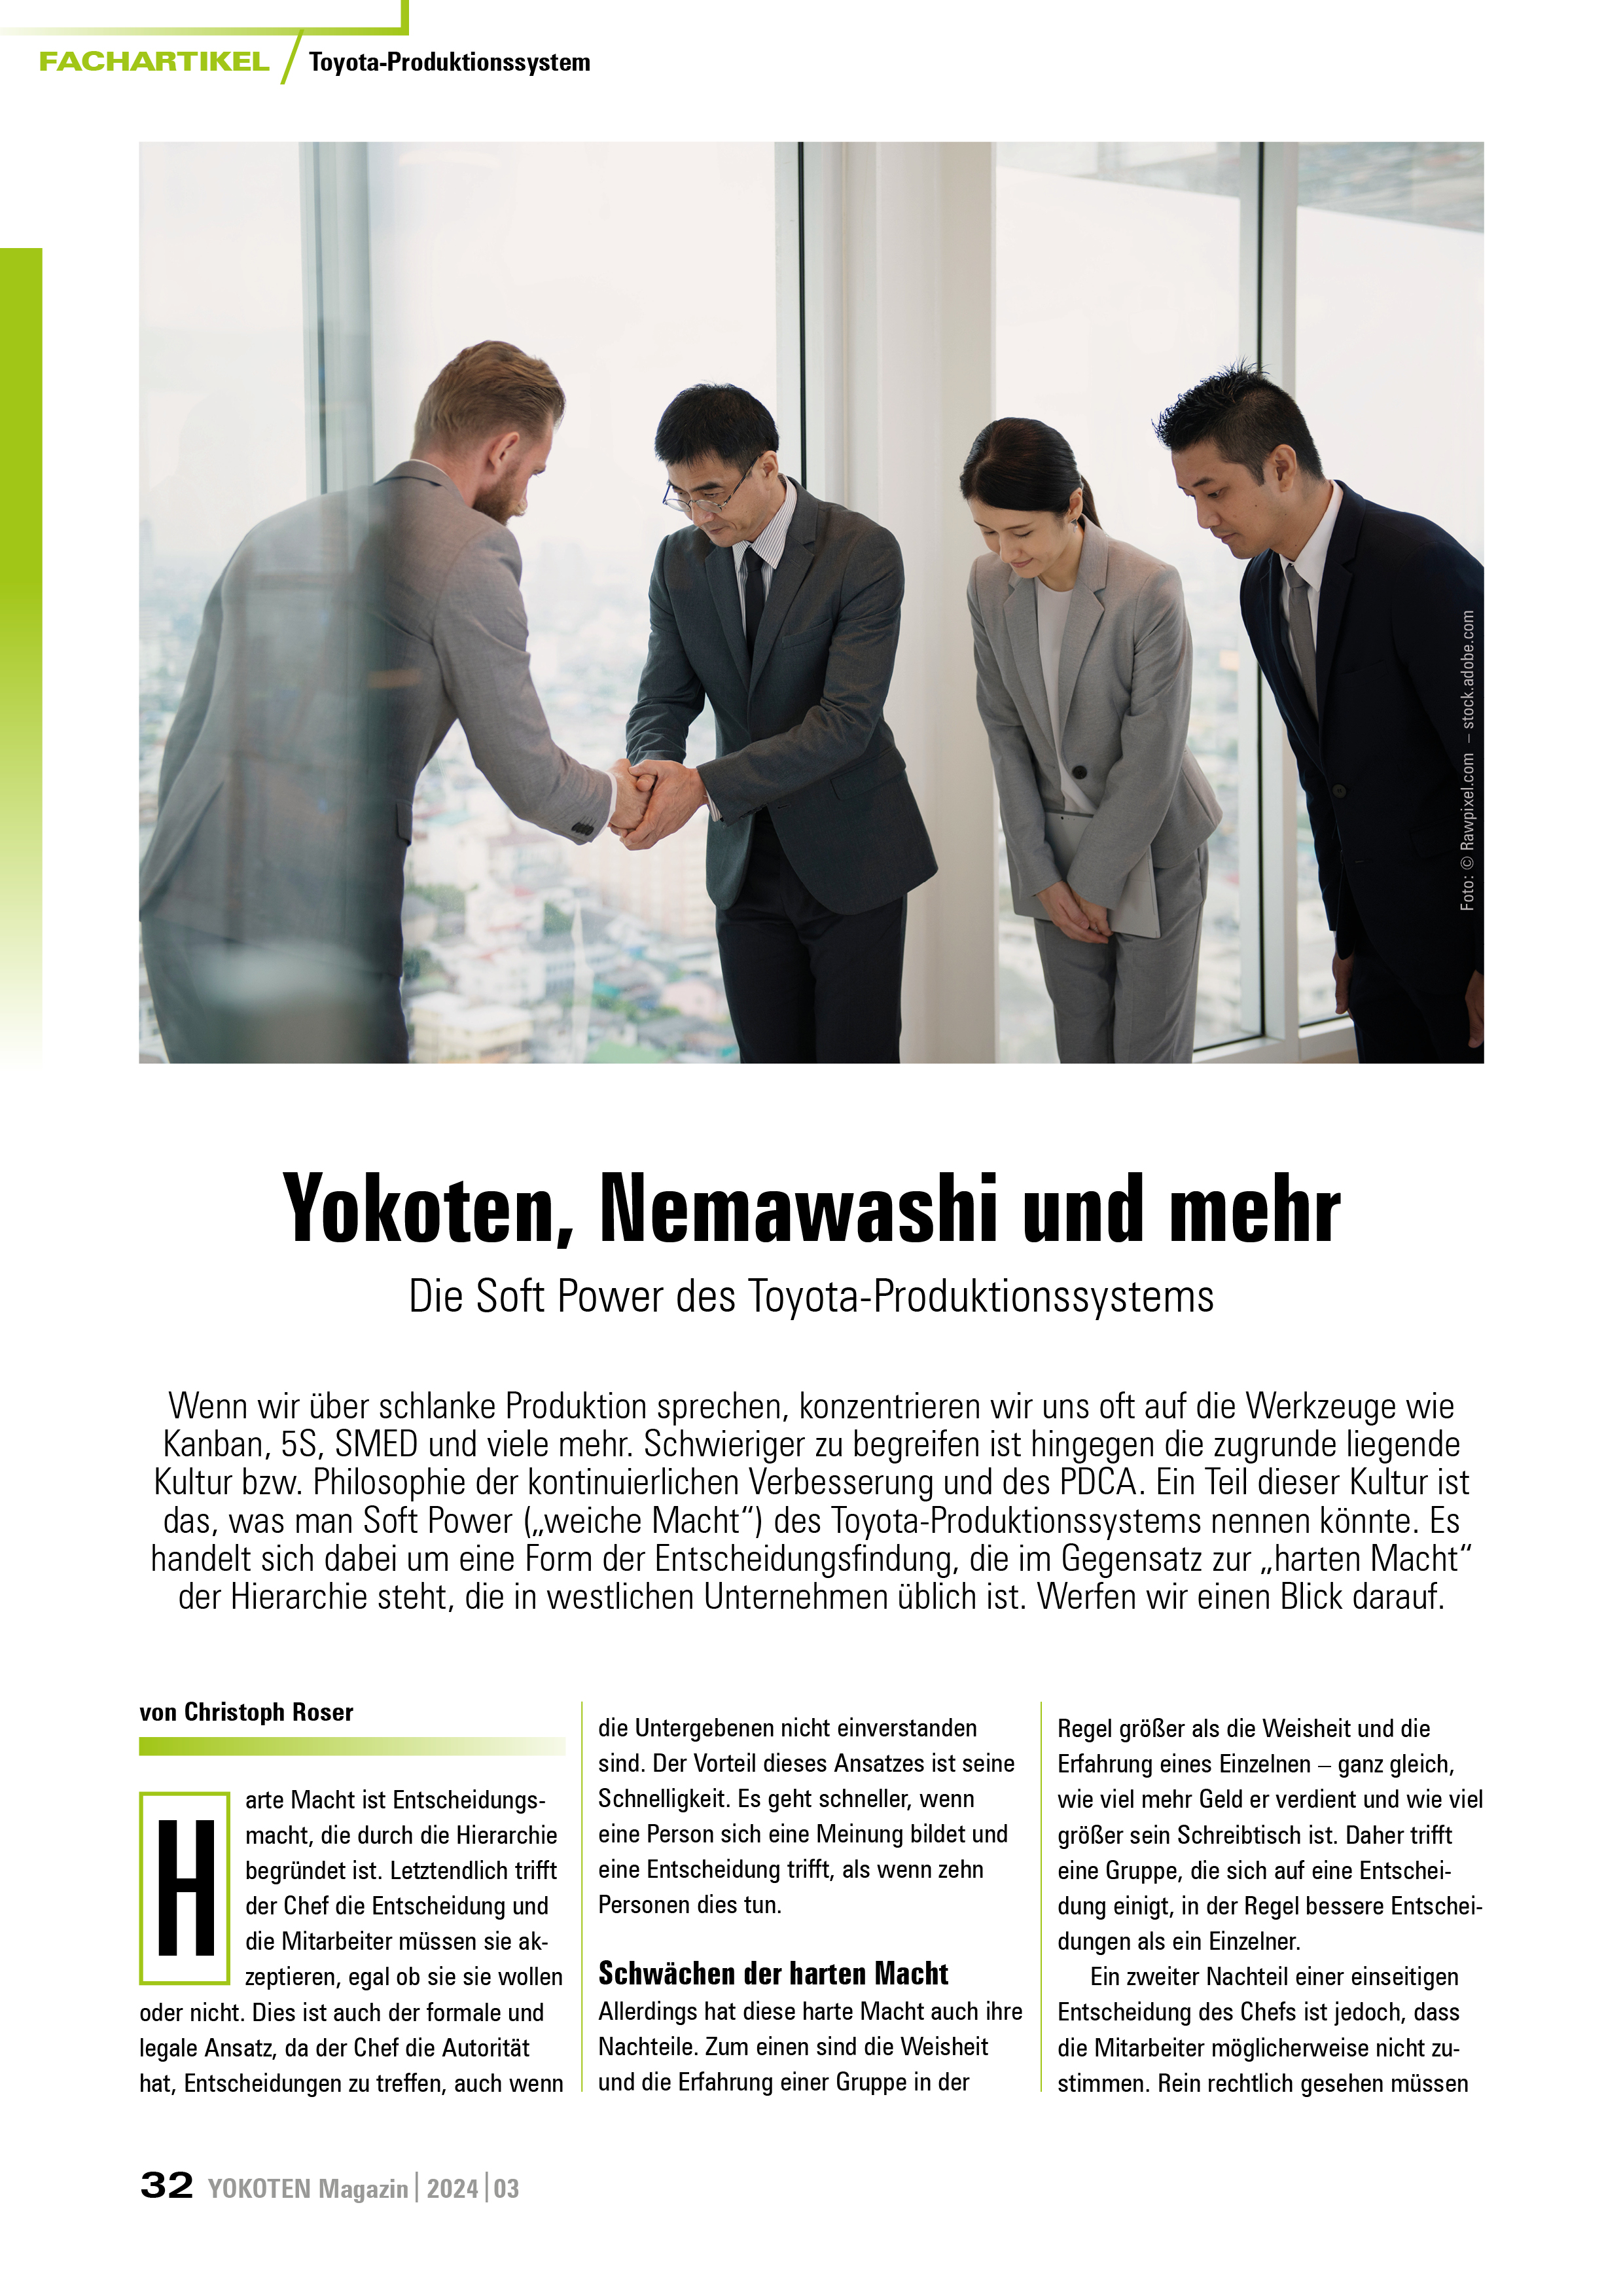 YOKOTEN-Artikel: Yokoten, Nemawashi und mehr